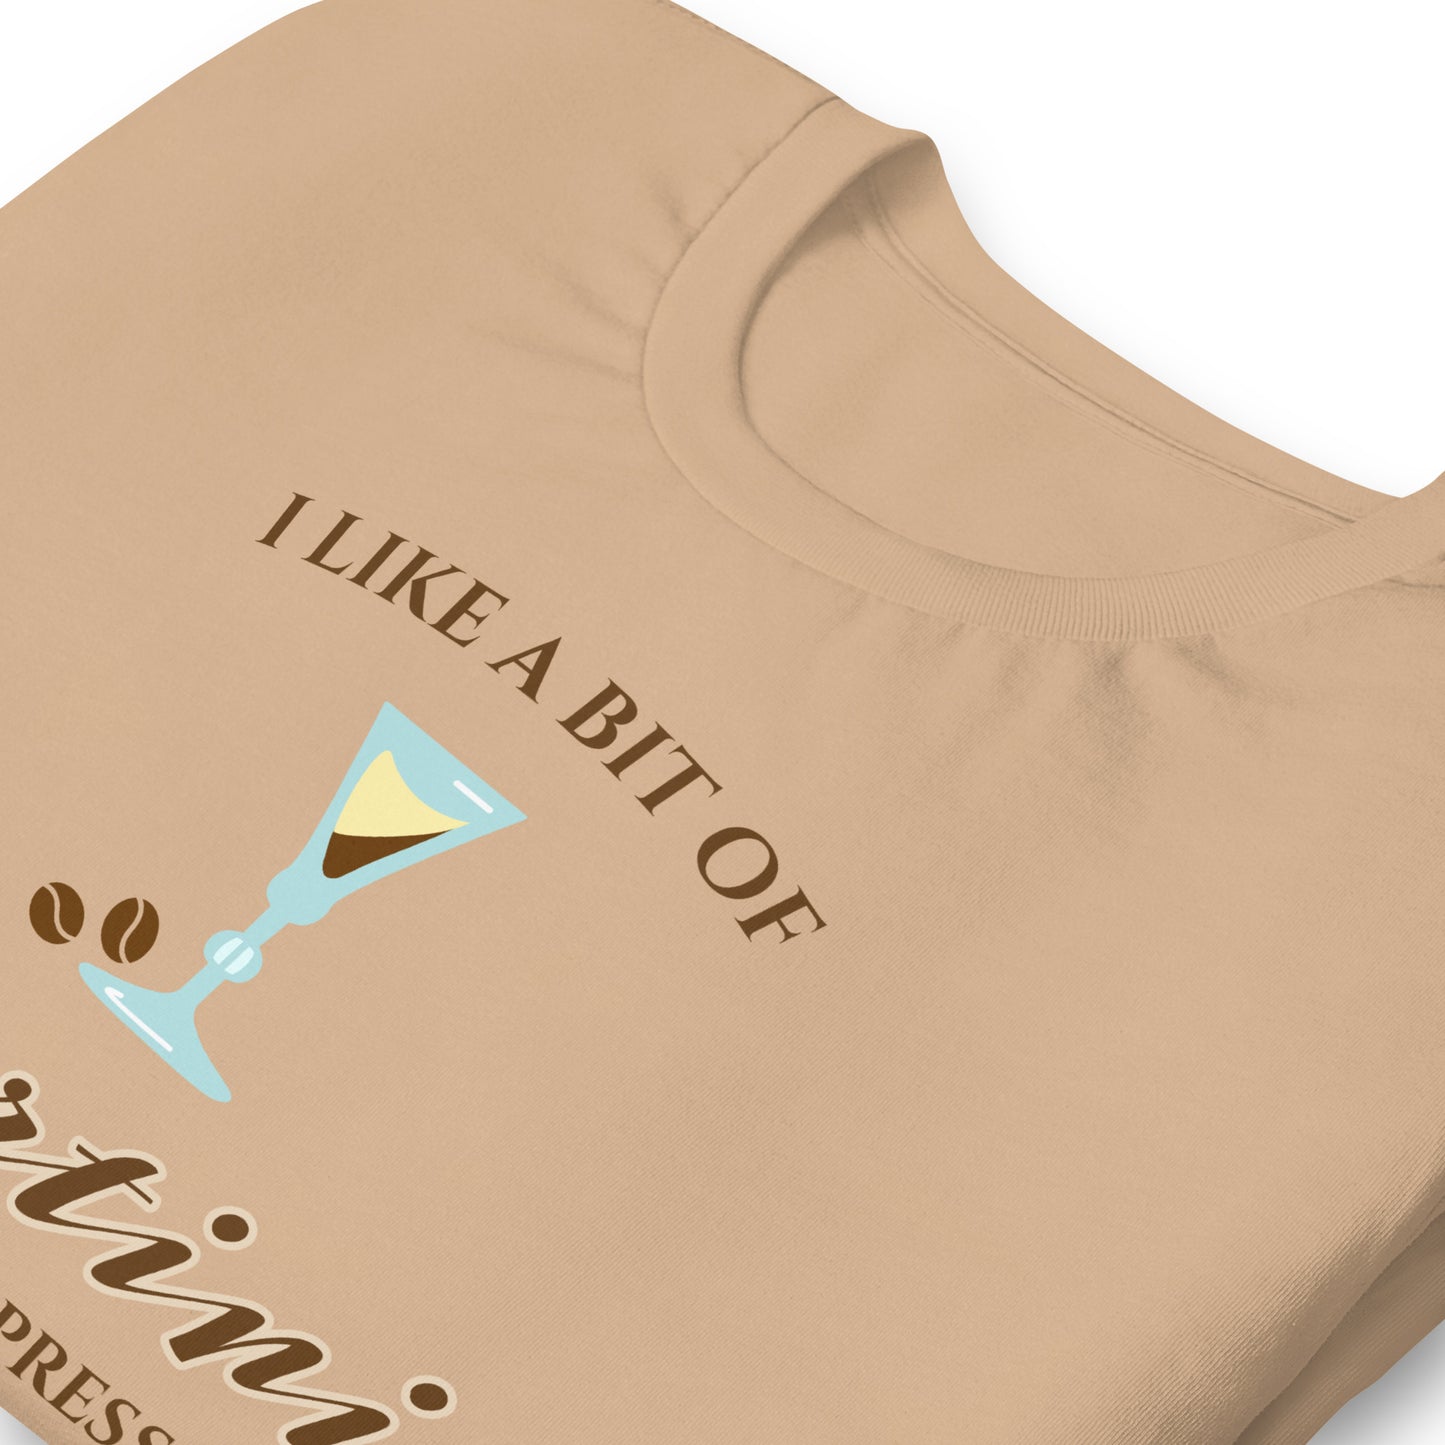 Espresso Martini | T-Shirt | Regular Fit